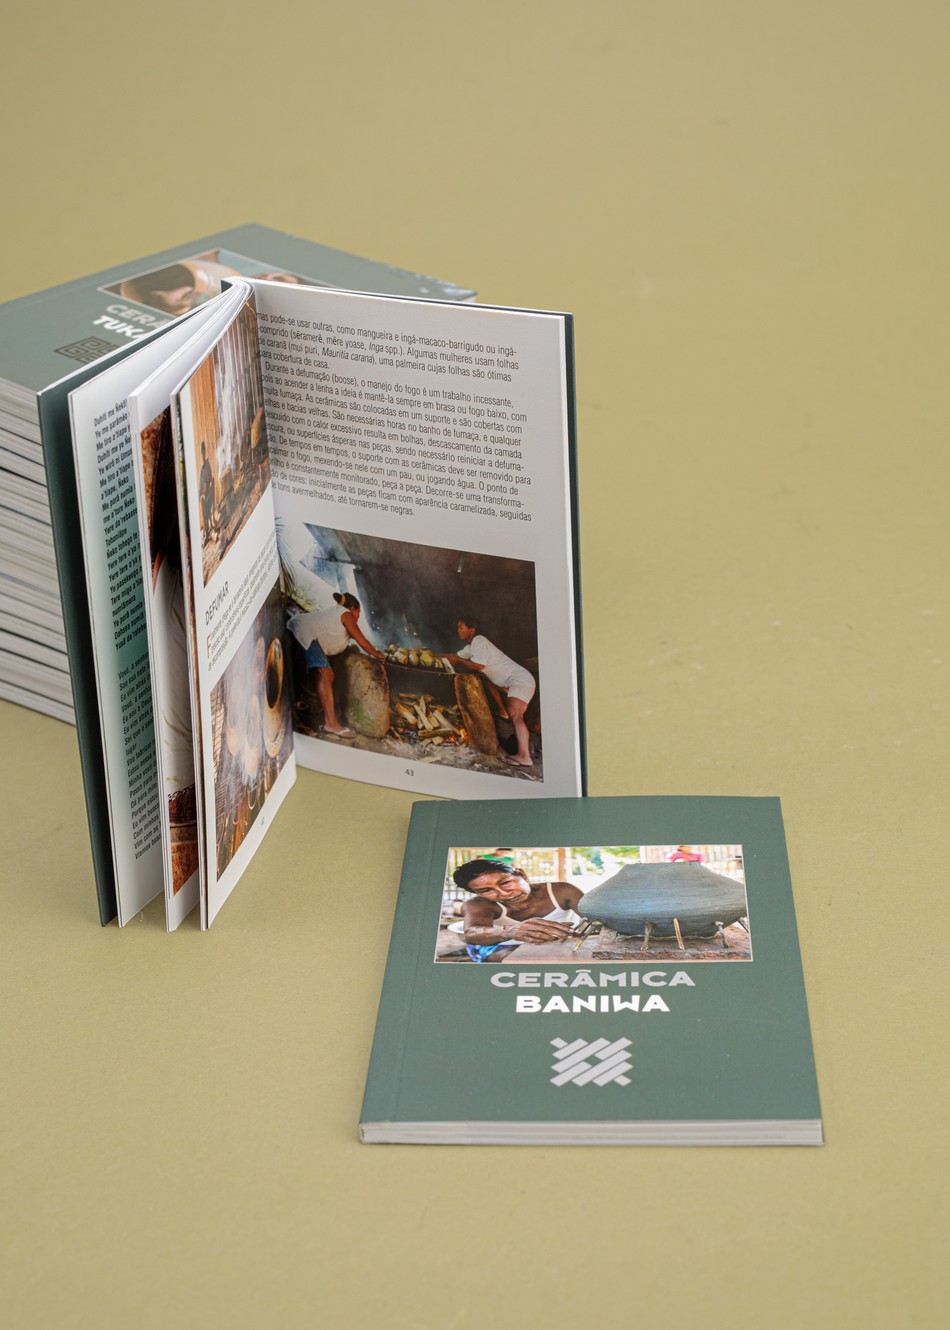 Kit Livros De Cerâmica | Tukano e Baniwa